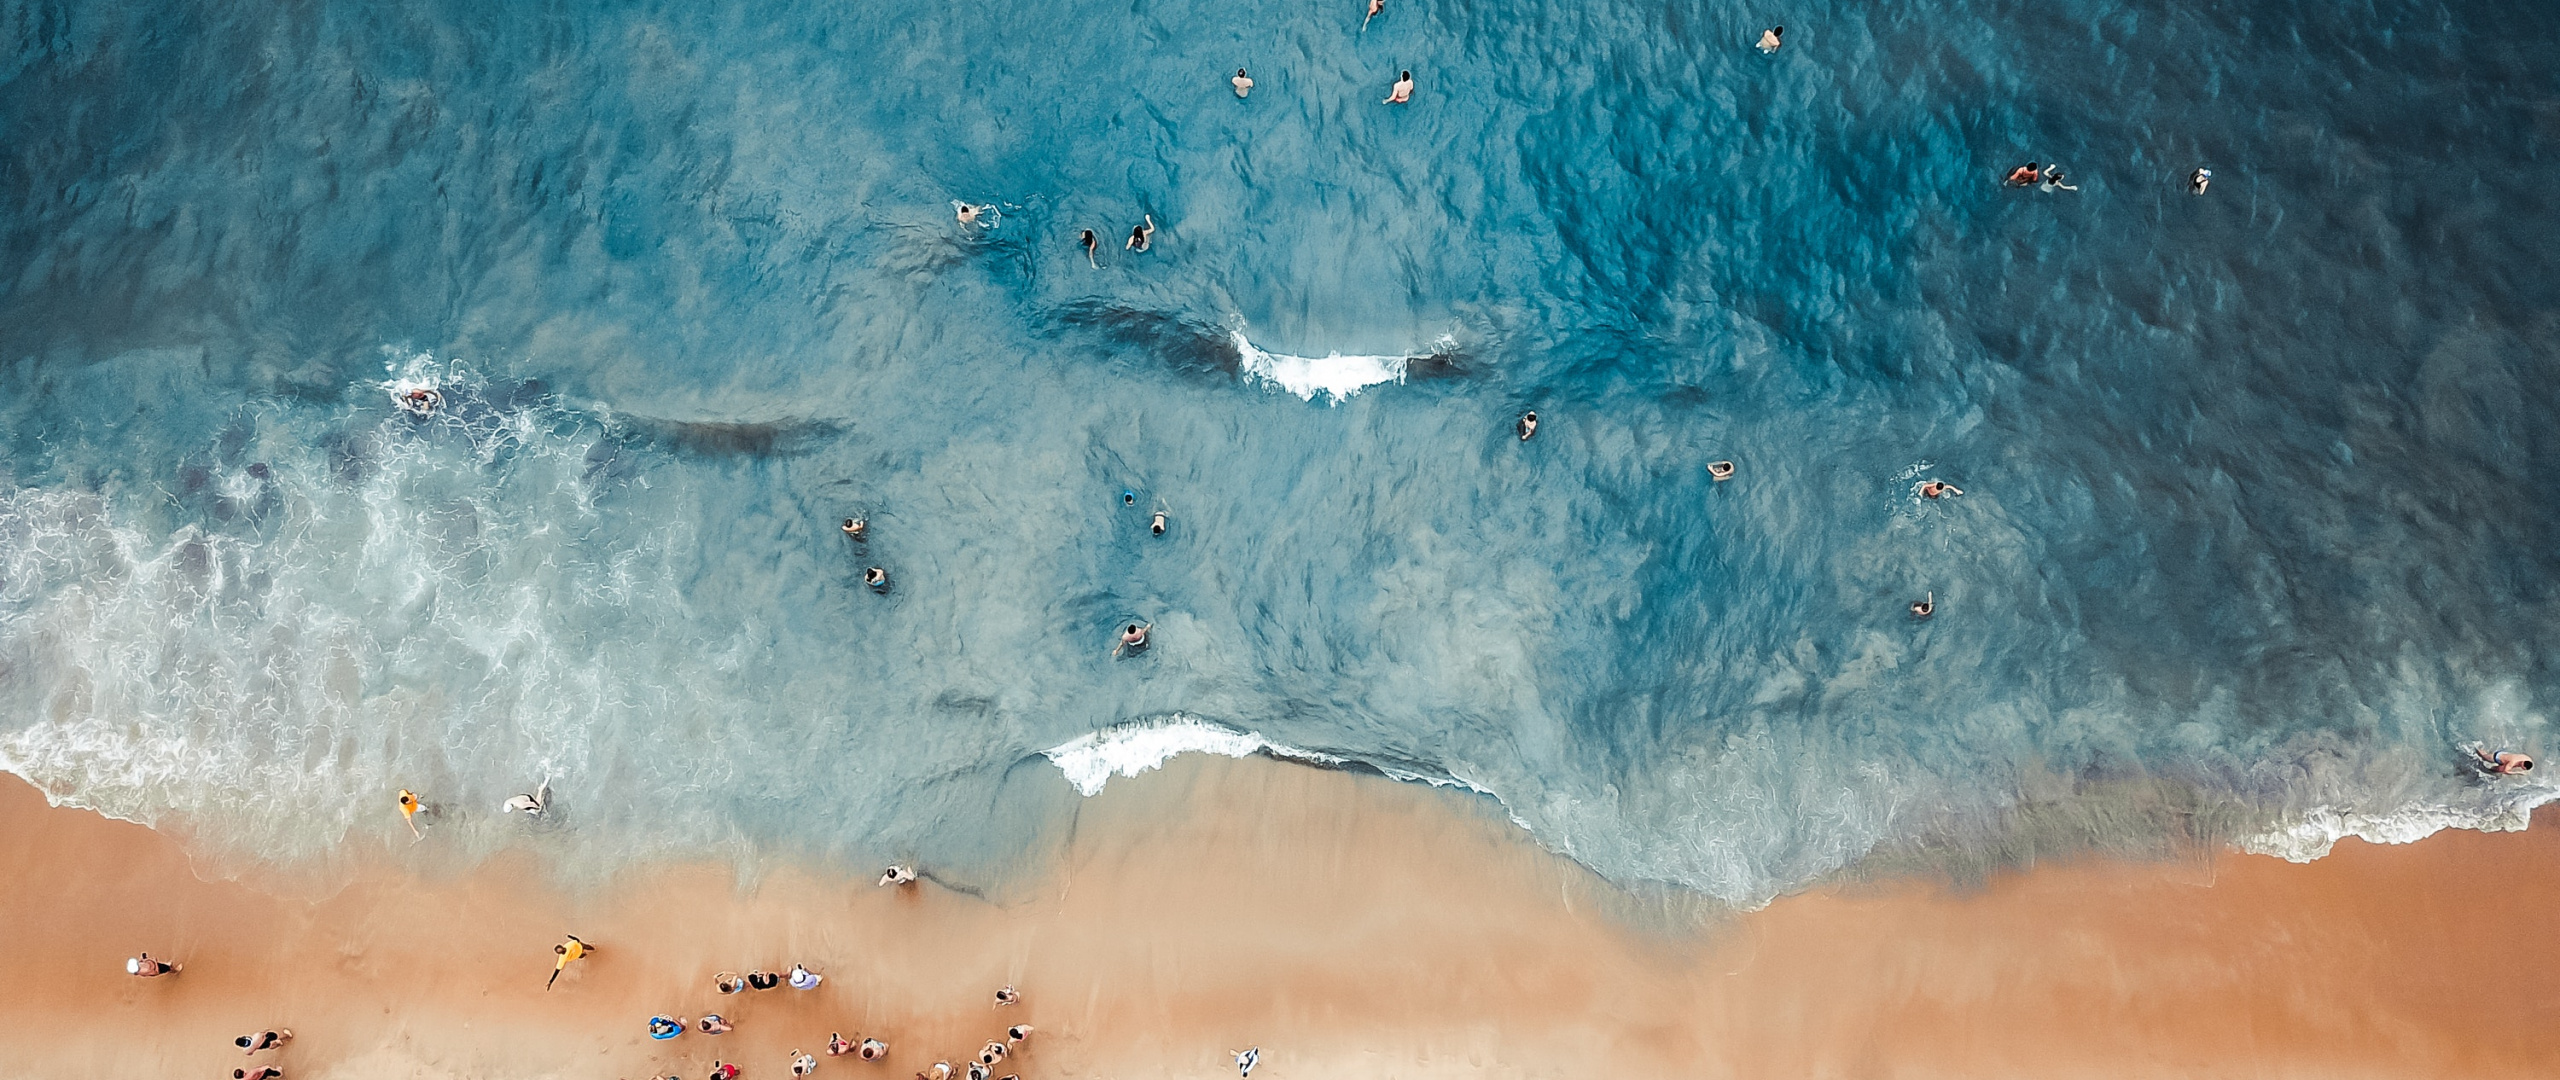 Download Beach, surfers, summer, aerial view wallpaper, 2560x Dual Wide, Widescreen